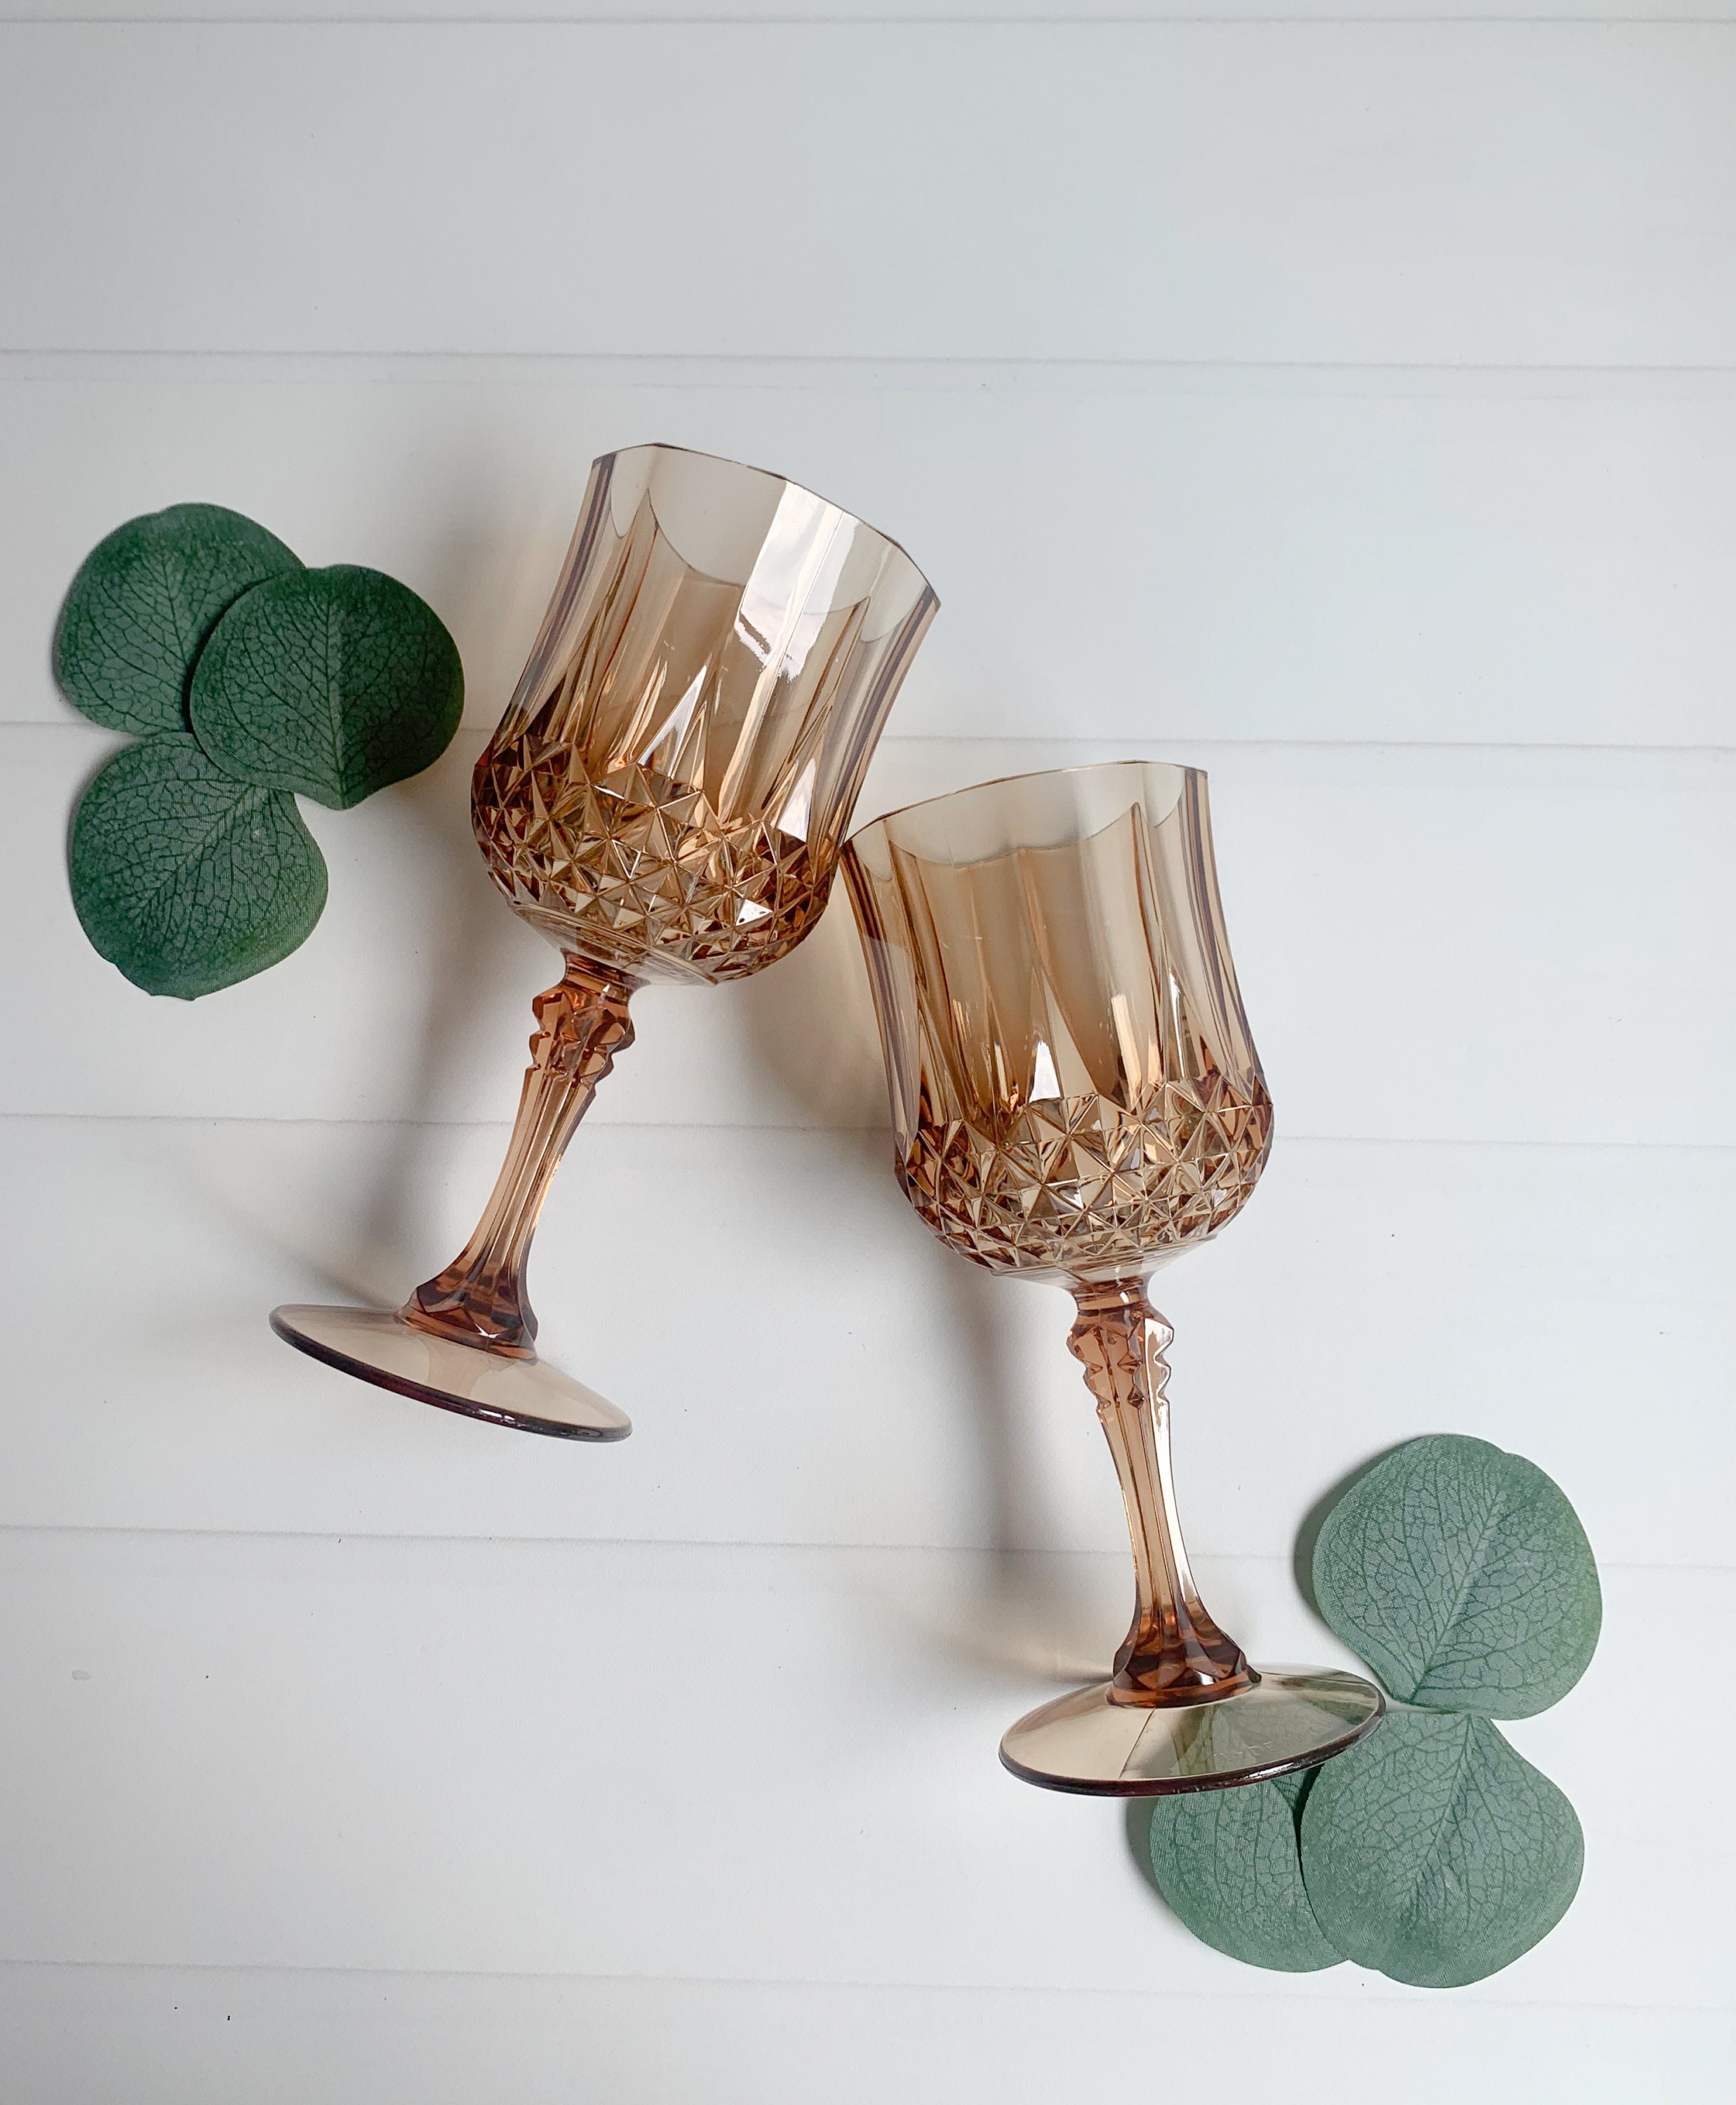 6 Pack | 8oz Amber Gold Crystal Cut Reusable Plastic Cocktail Goblets,  Shatterproof Wine Glasses